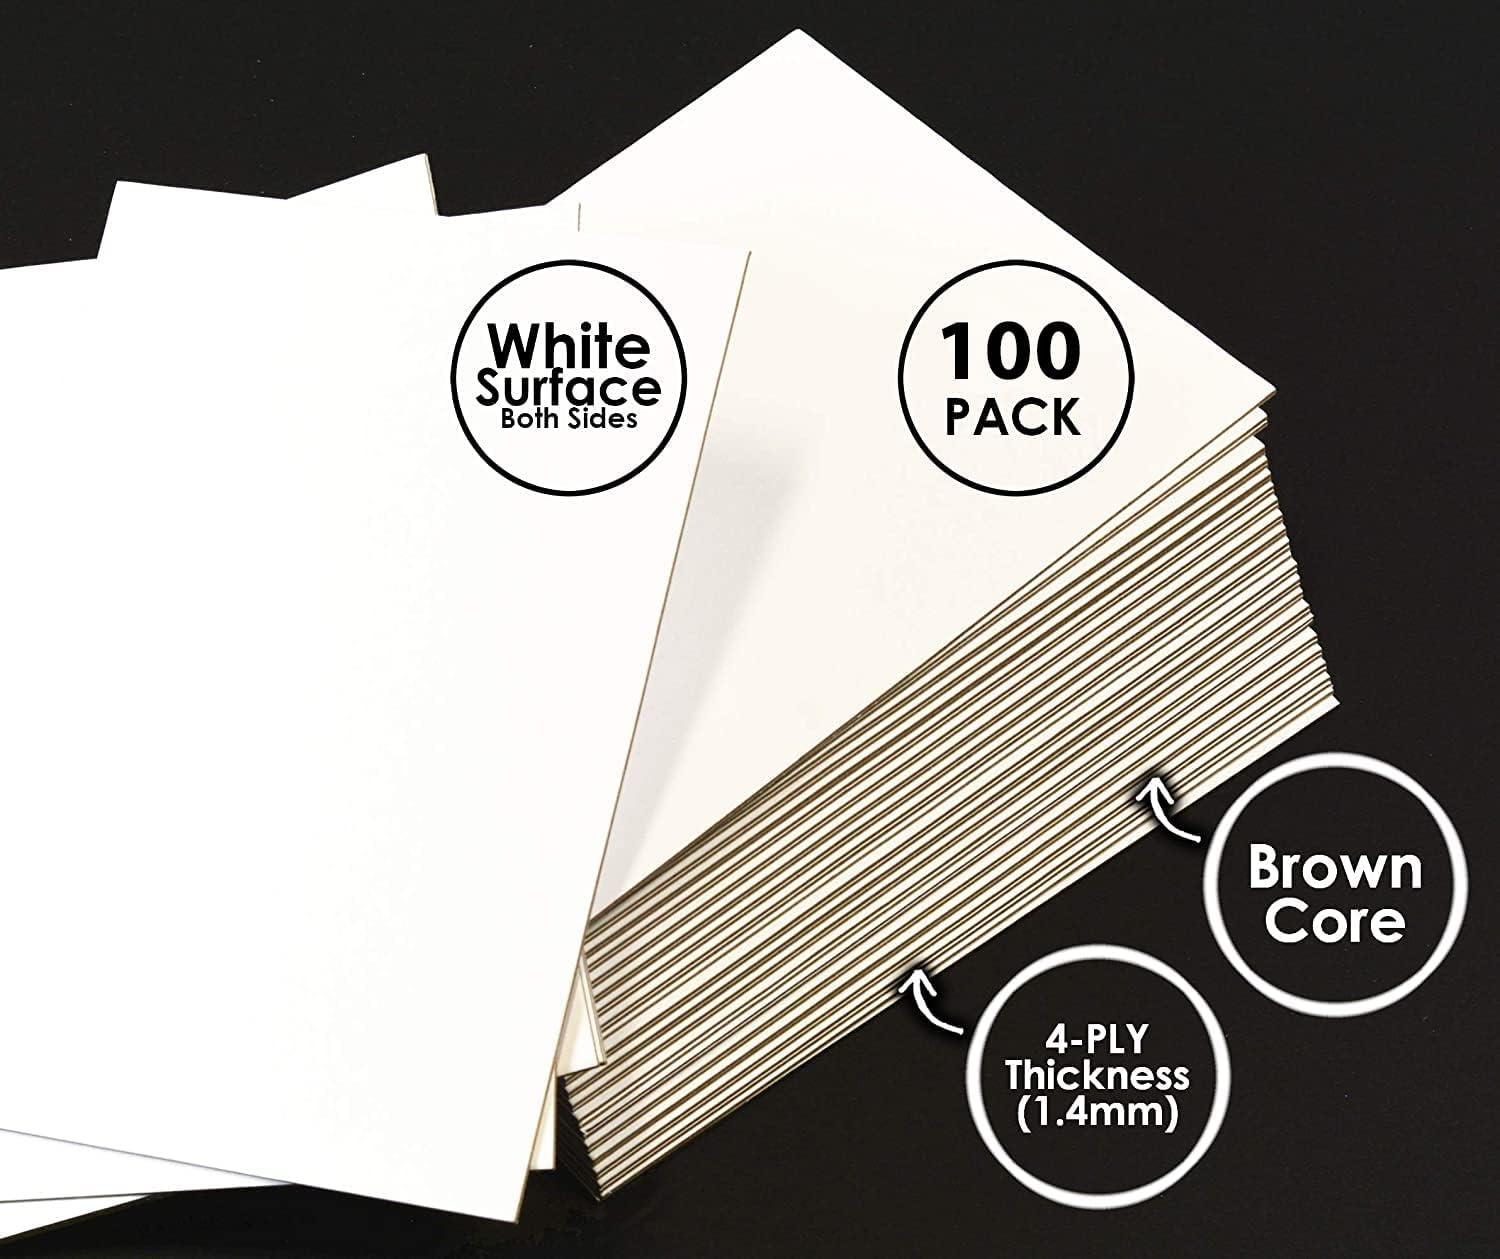 Mat Board Center, 25 Pack 8.5X11 White Cardboard Sheet, 1/8 Inch Thick,  Flat Cor